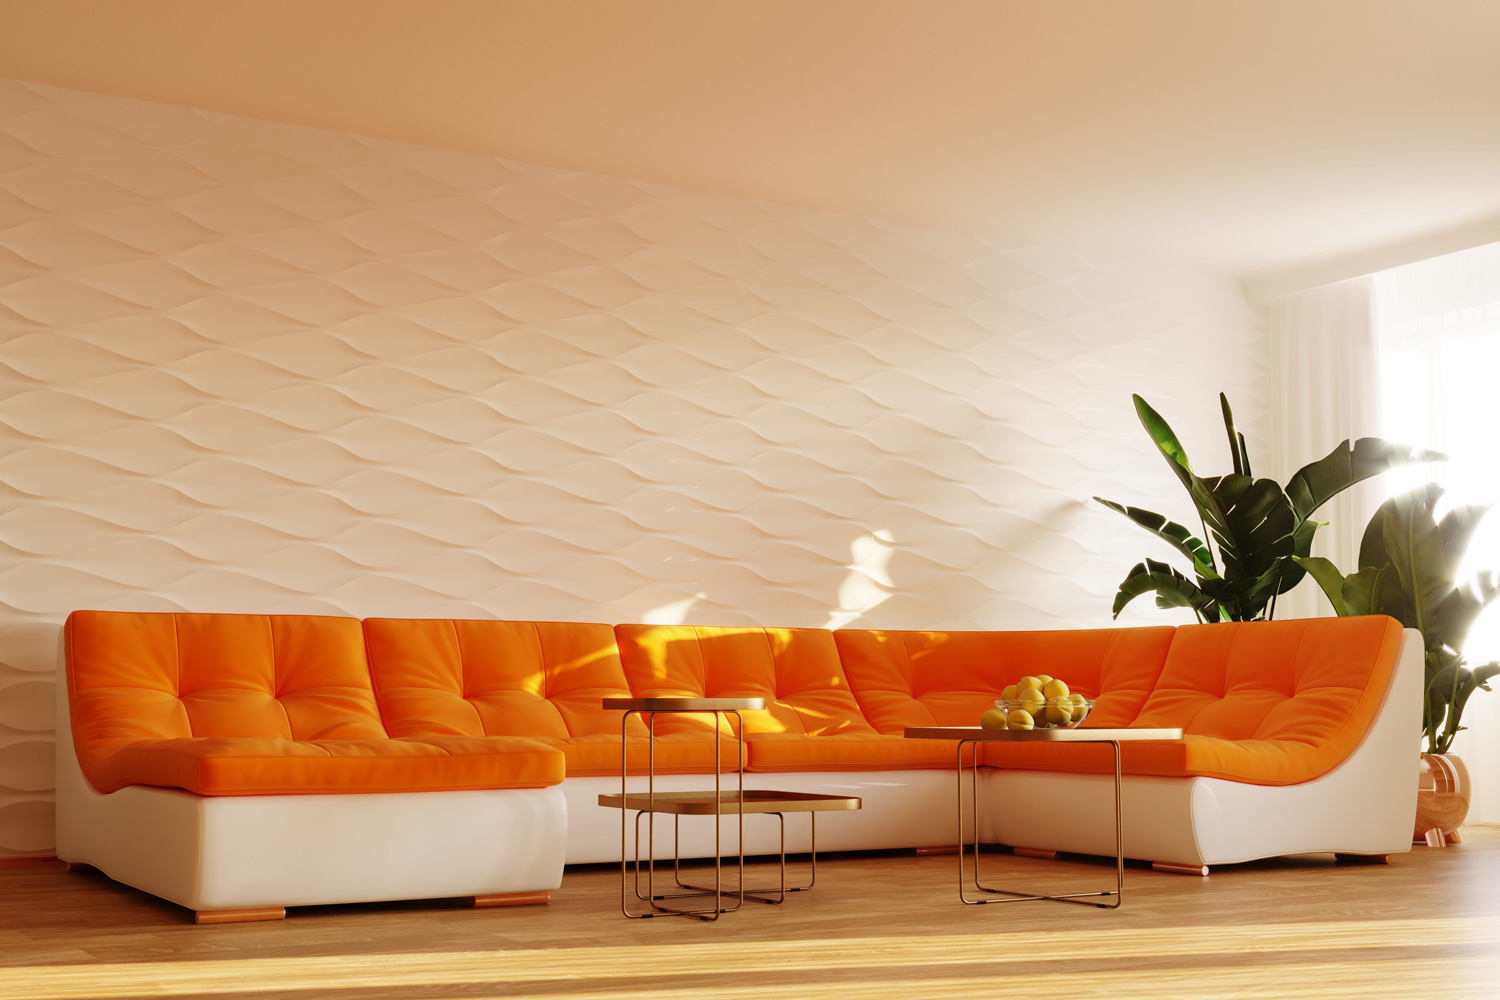 3d illustration of living room with big orange sofa.